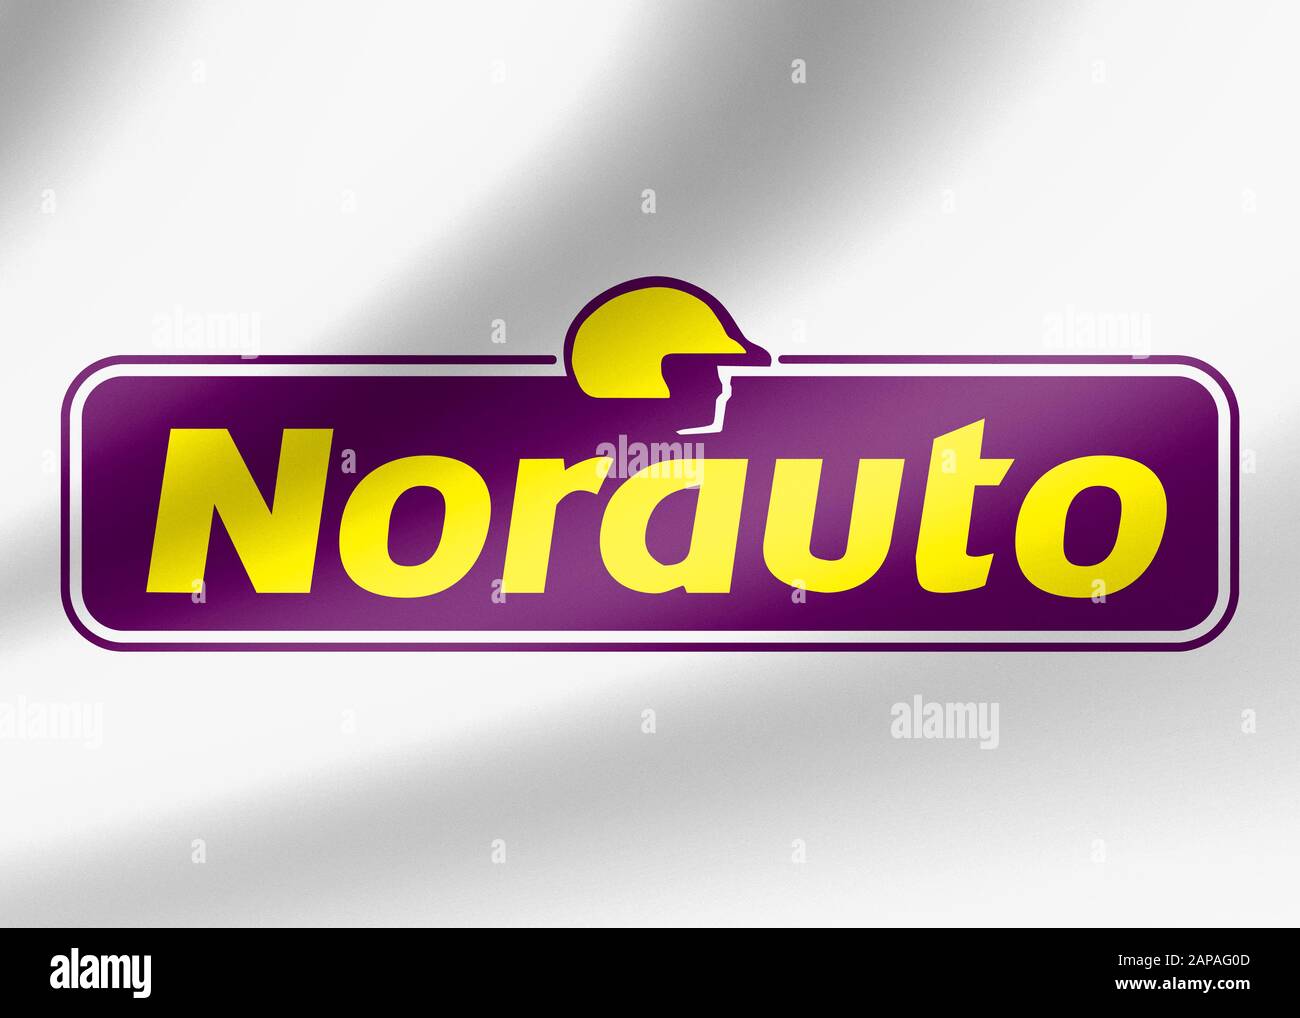 Norauto logo Stock Photo